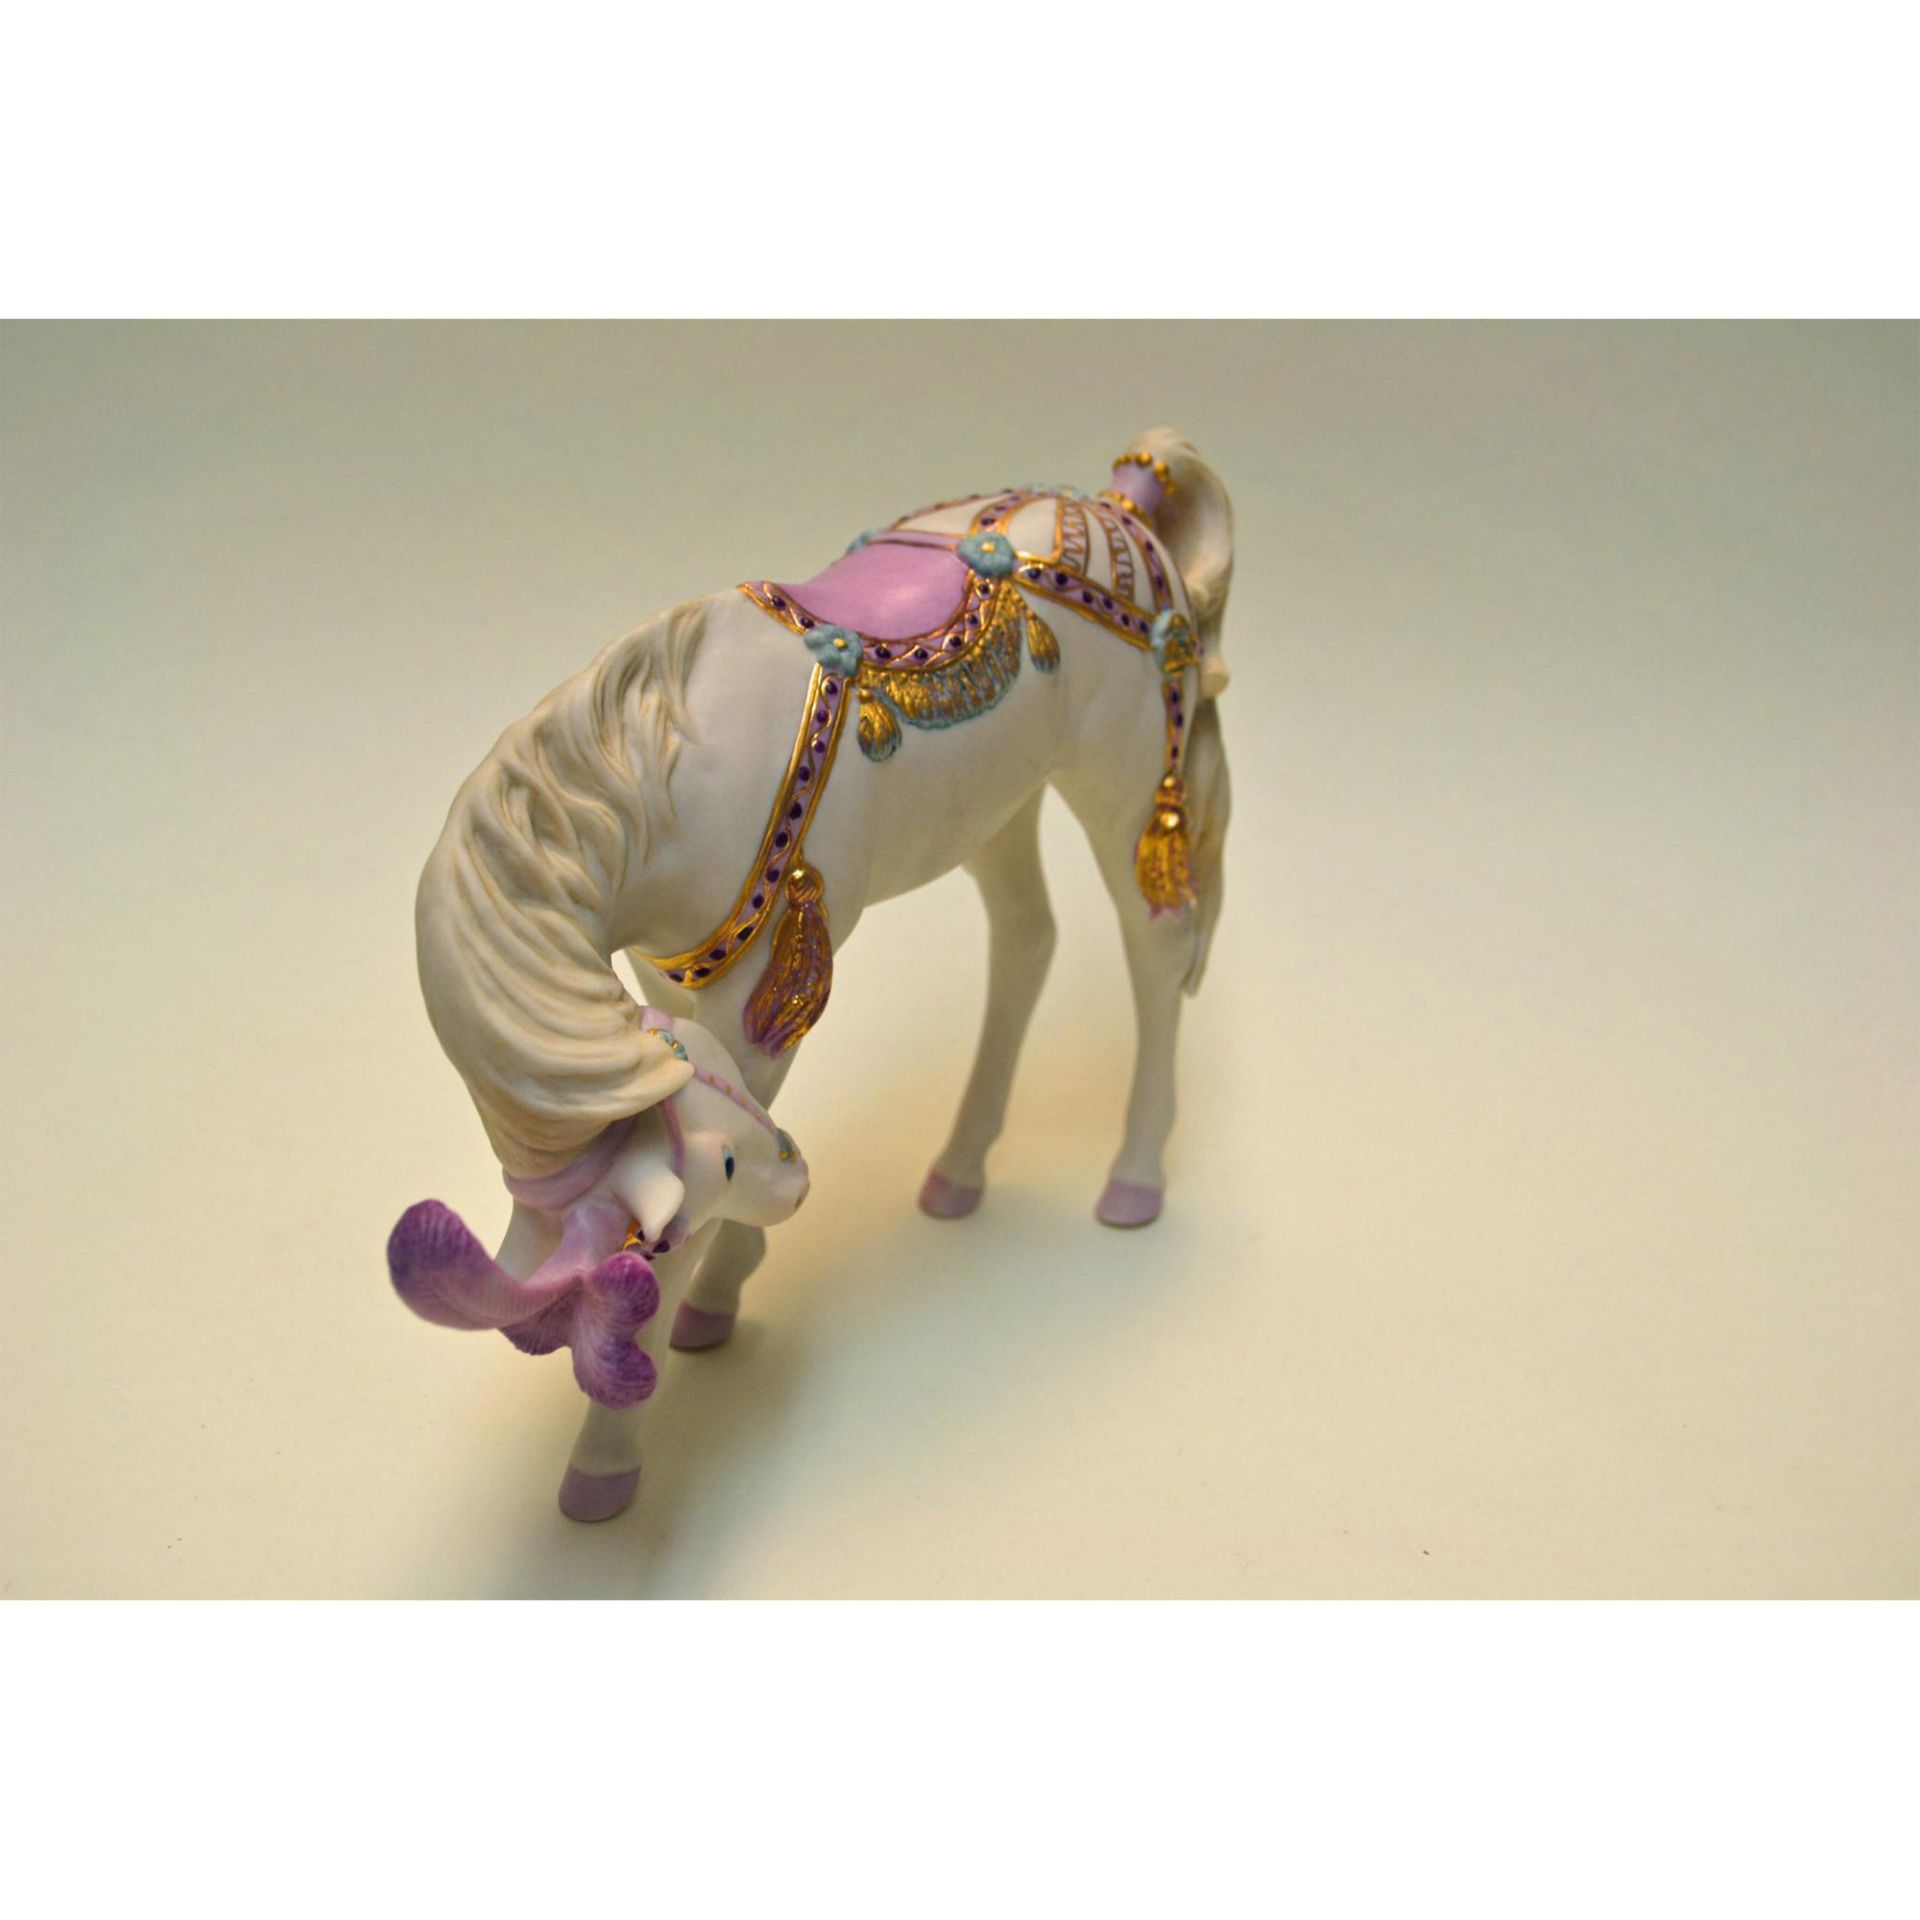 Cybis Porcelain Poppy The Performing Pony Figurine - Image 2 of 7